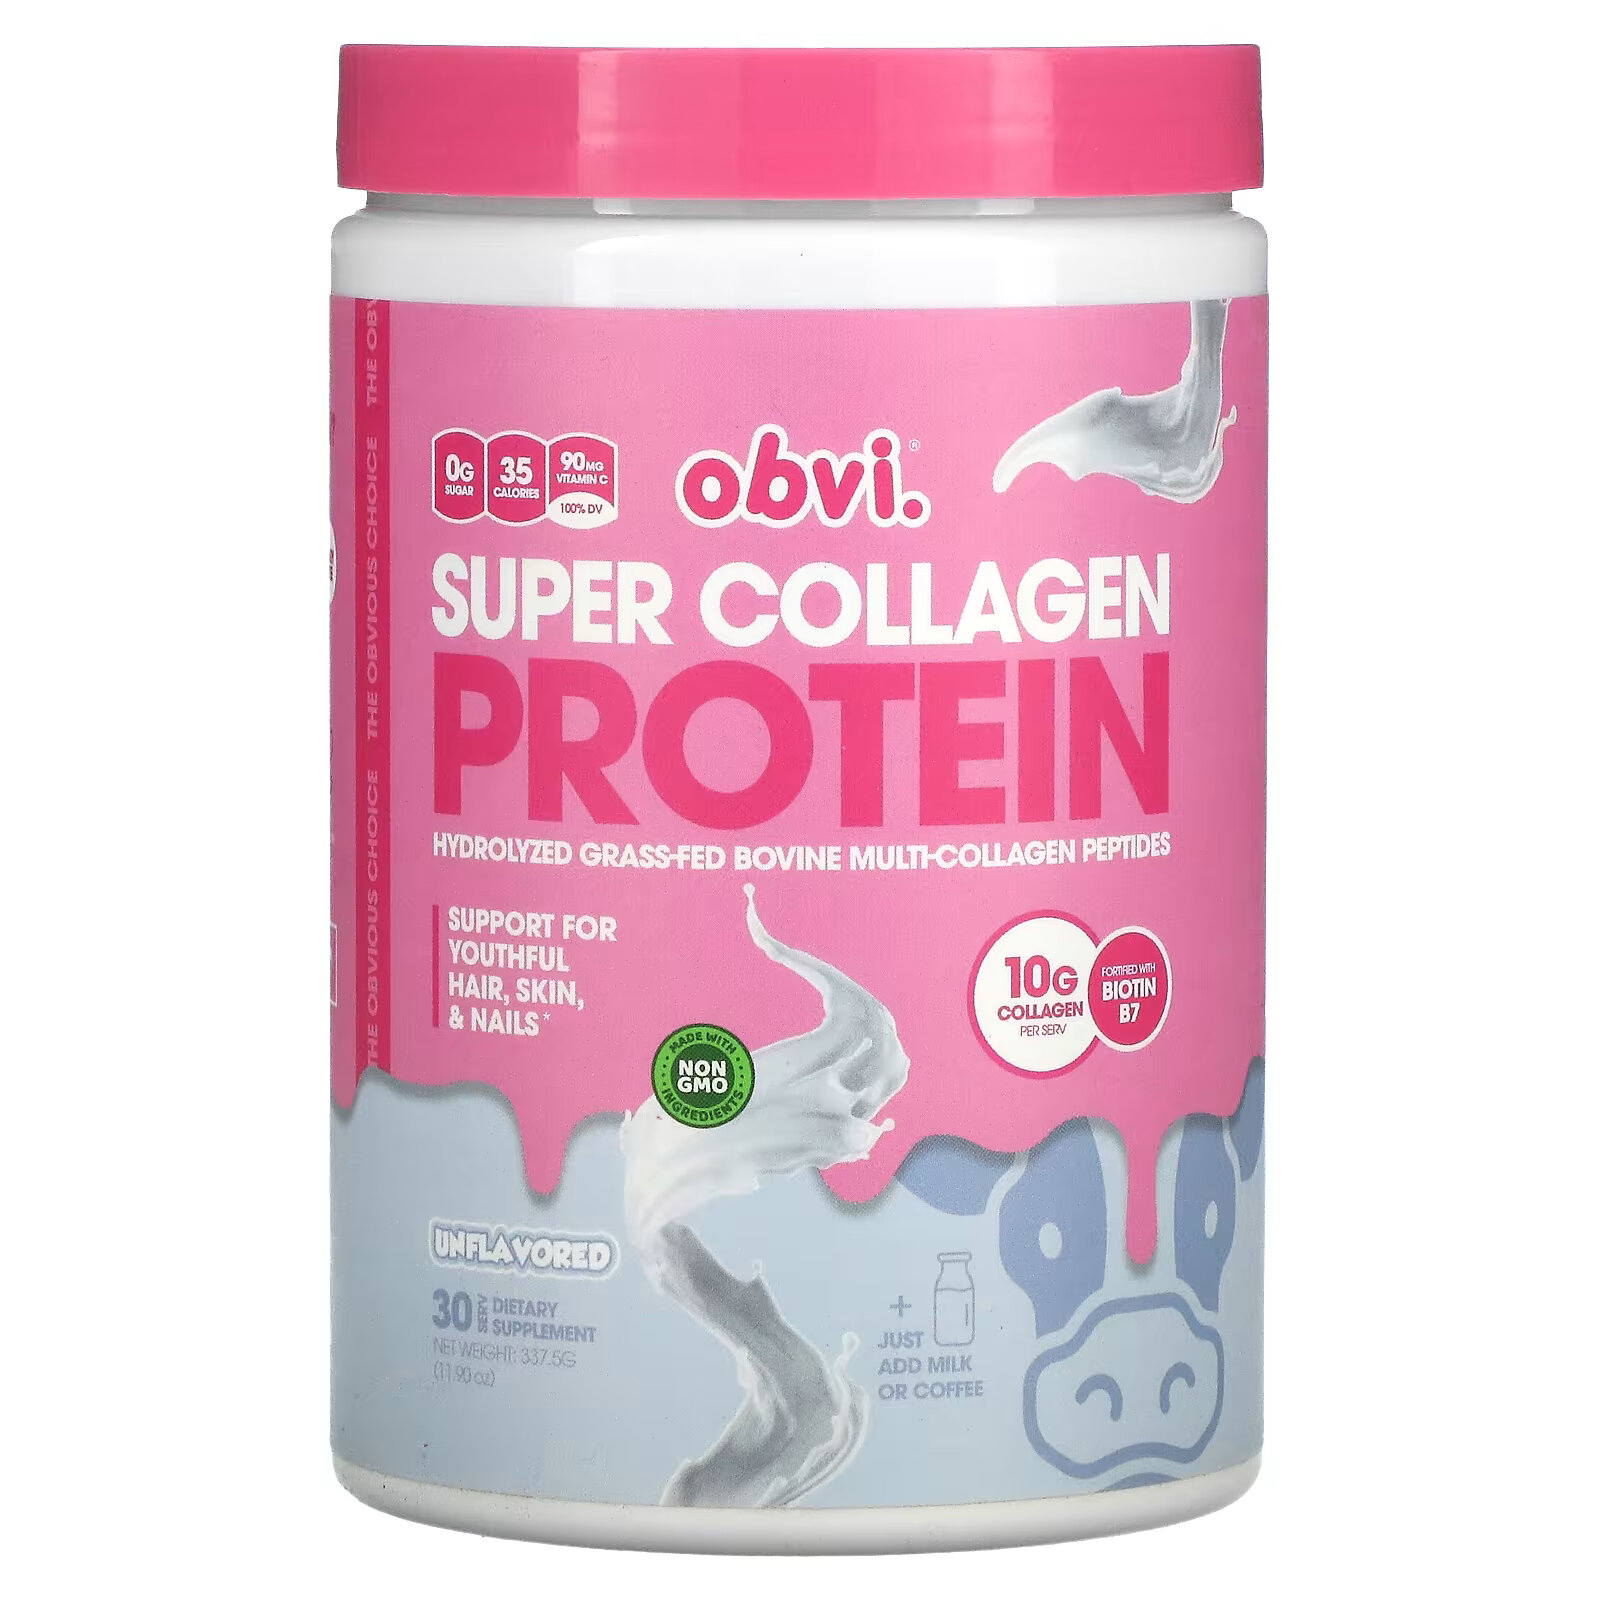 Obvi, Super Collagen Protein, без добавок, 337,5 г (11,90 унции) obvi super collagen protein какао хлопья 390 г 13 79 унции